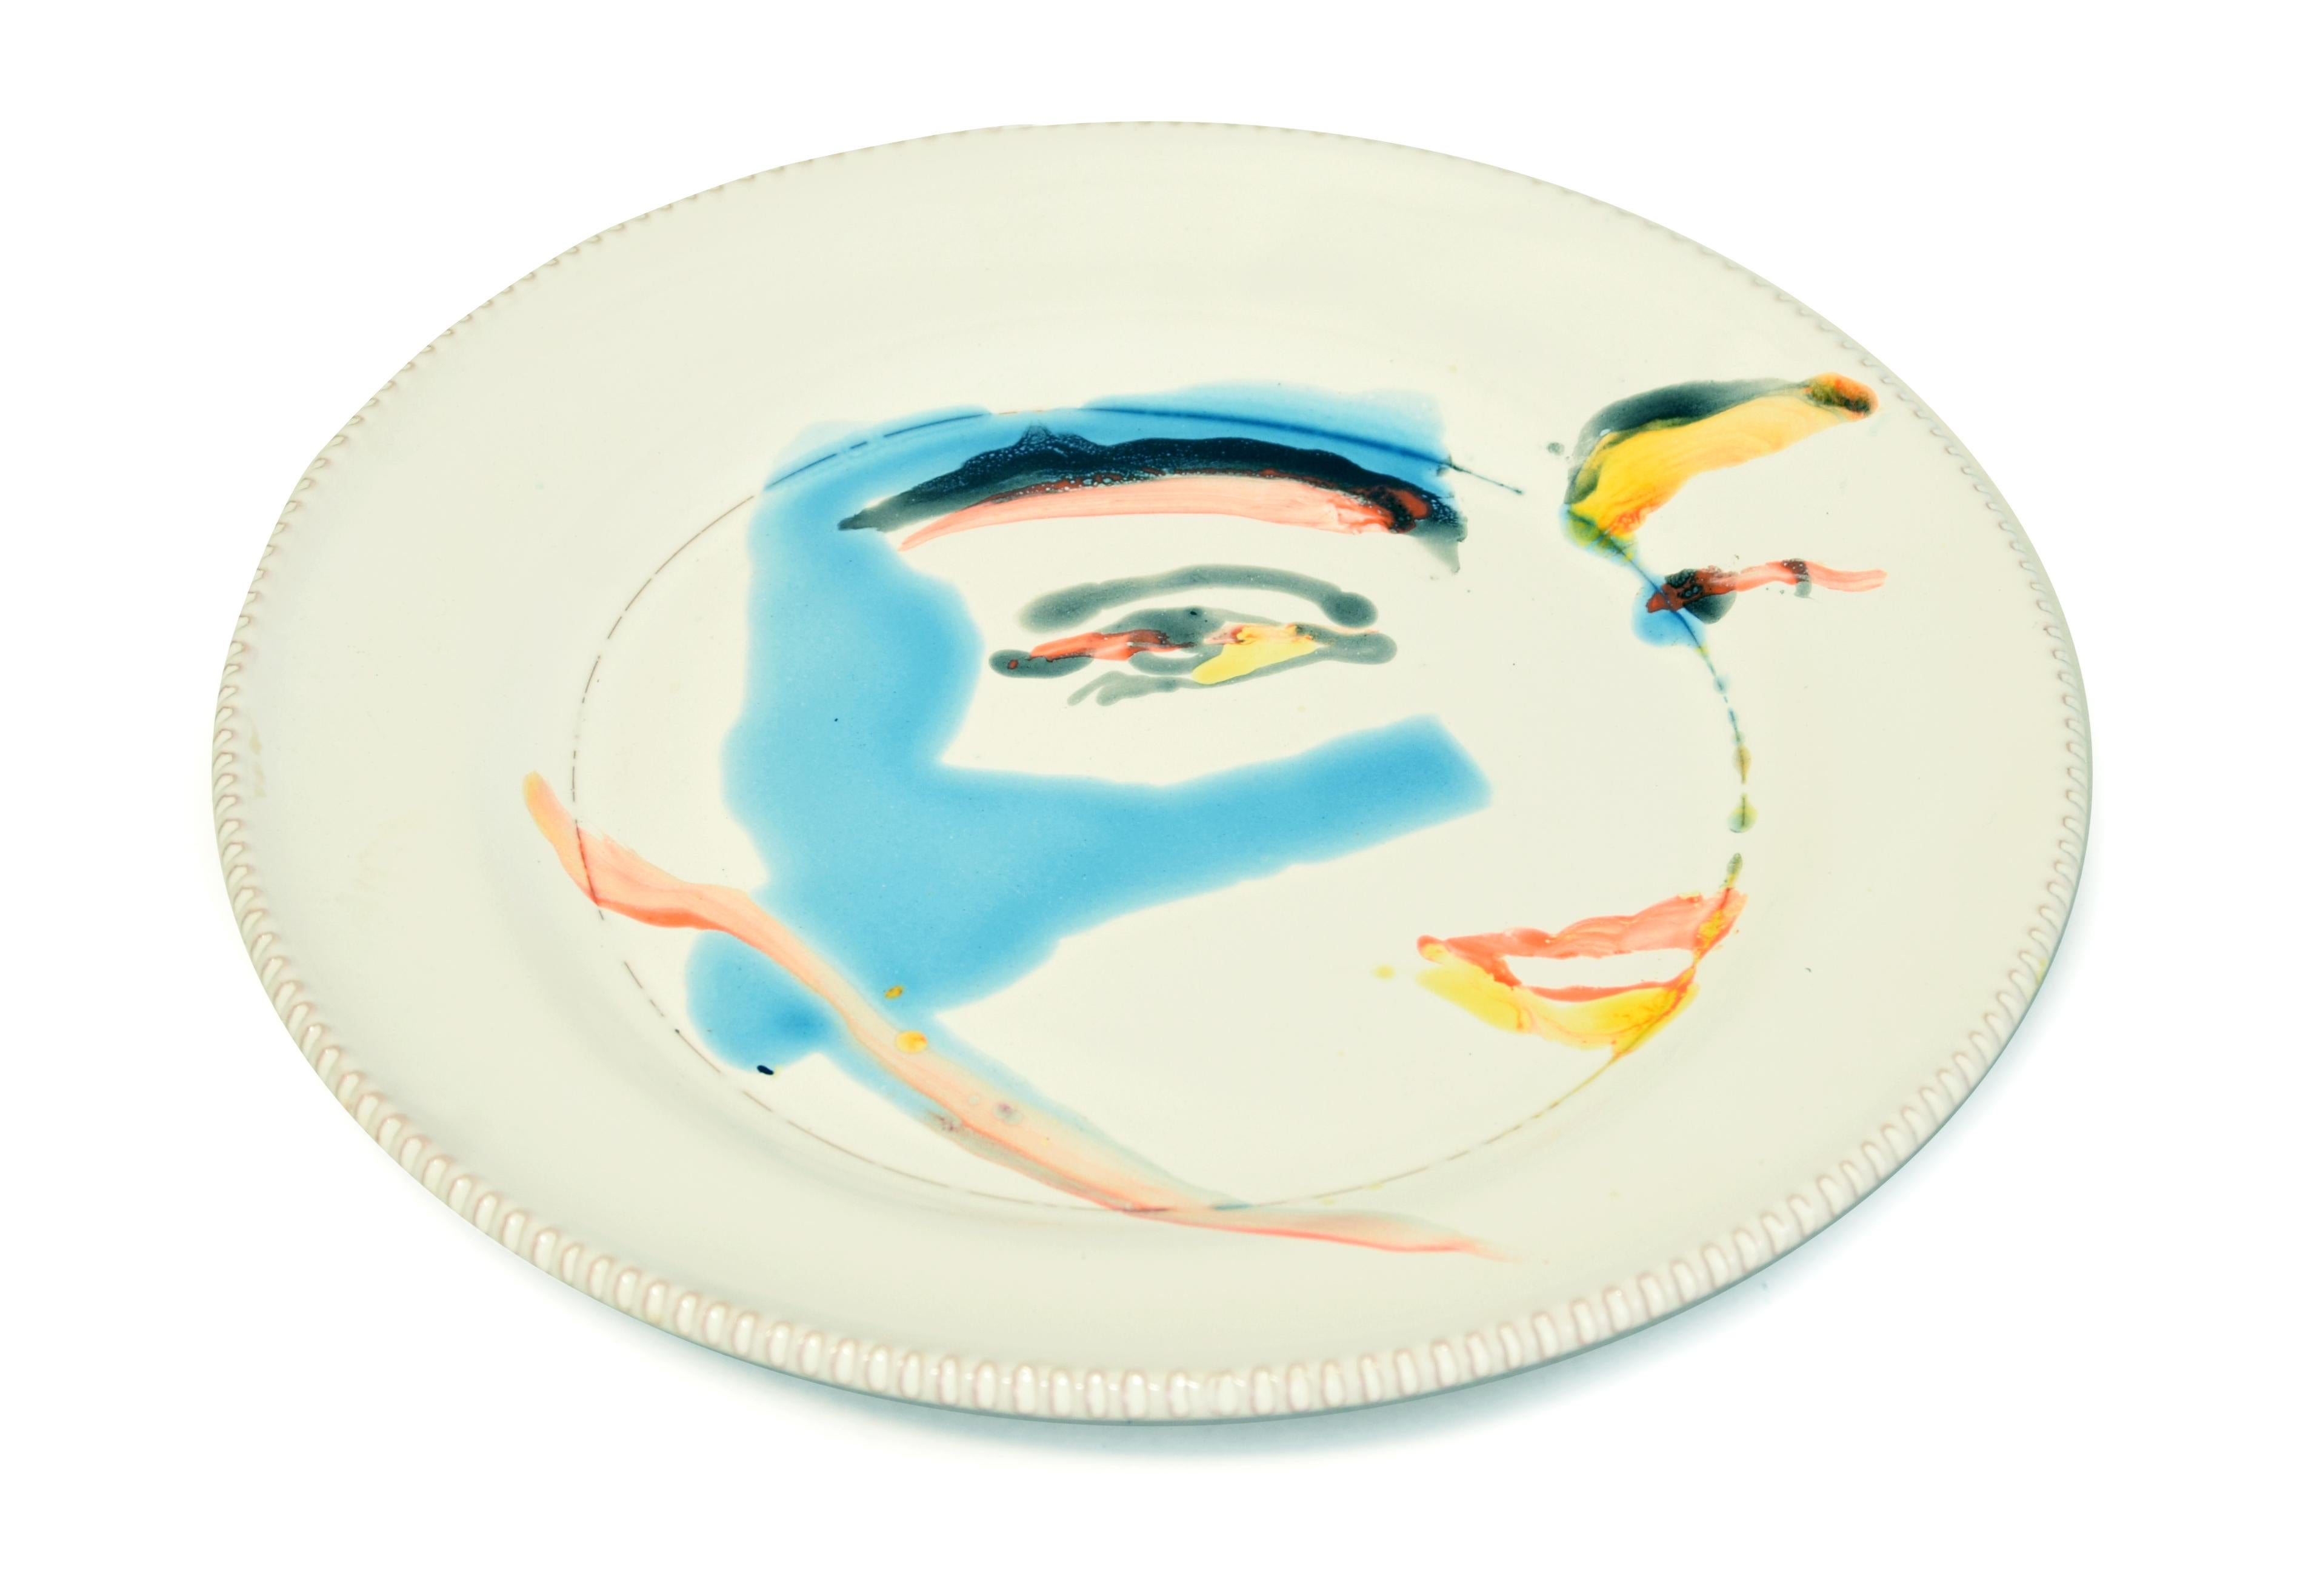 Eyes - Original  Hand-made Flat Ceramic Dish by A. Kurakina - 2019 - Art by Anastasia Kurakina